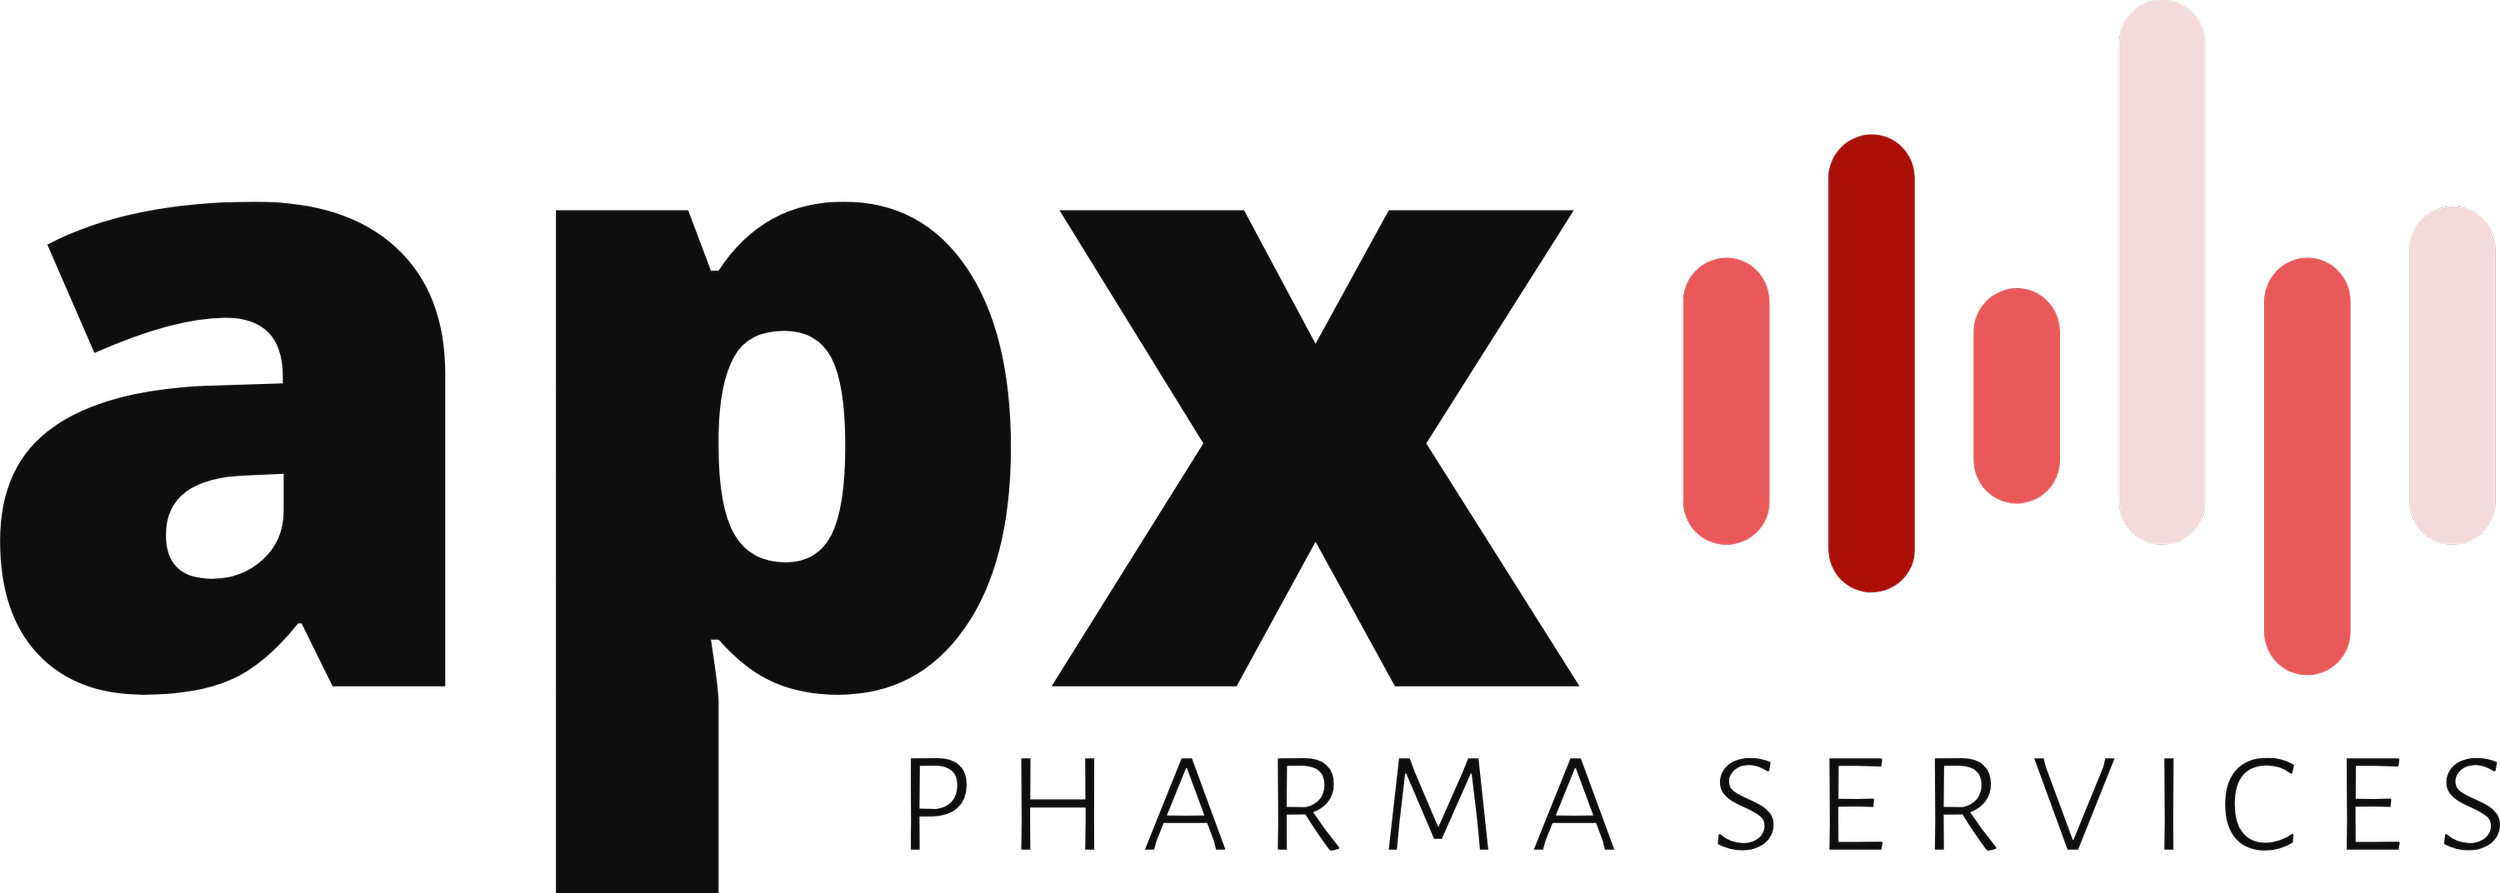 APX Pharma Services